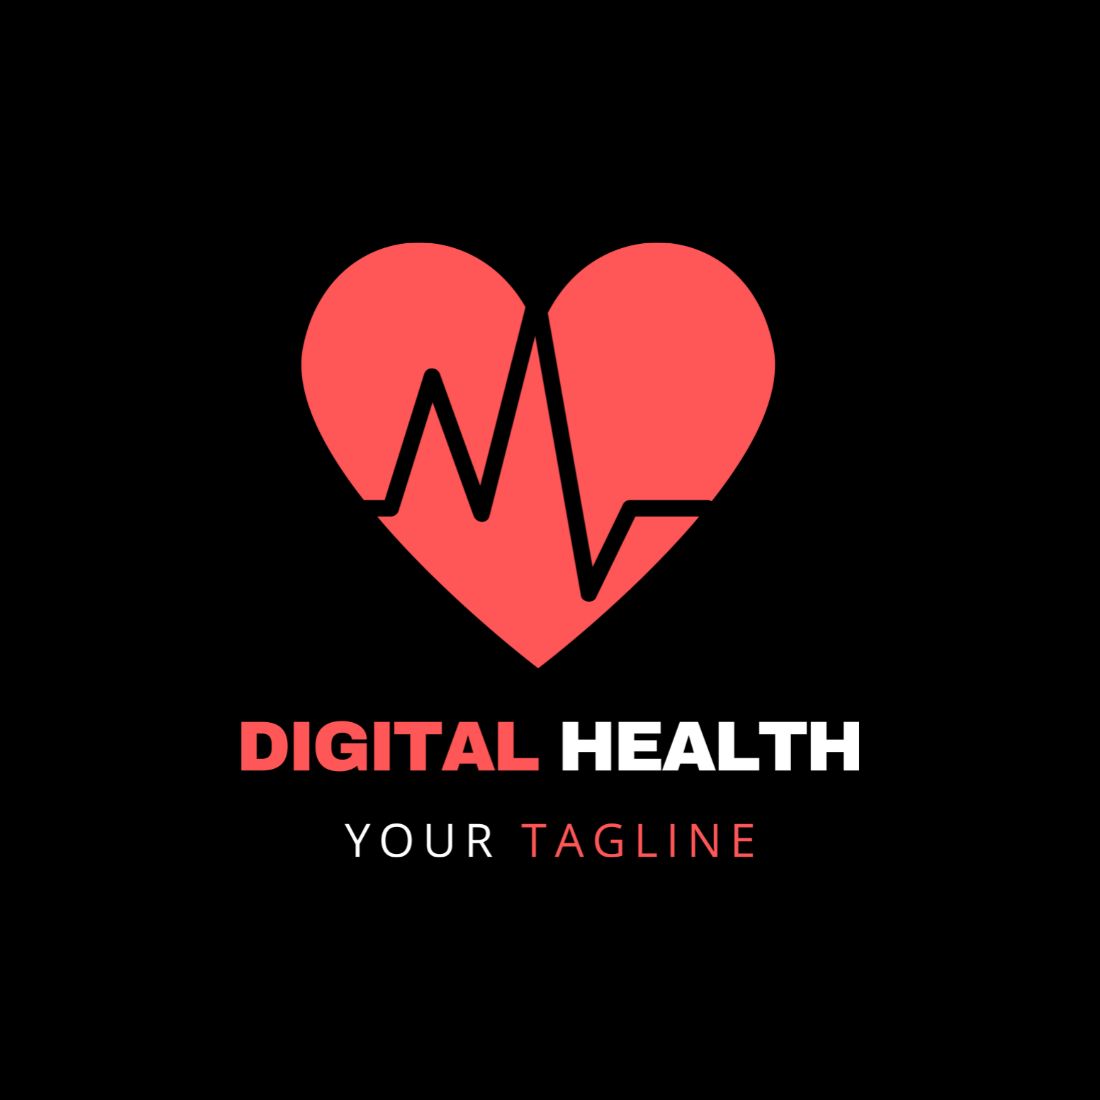 Digital Health Logo Design cover image.